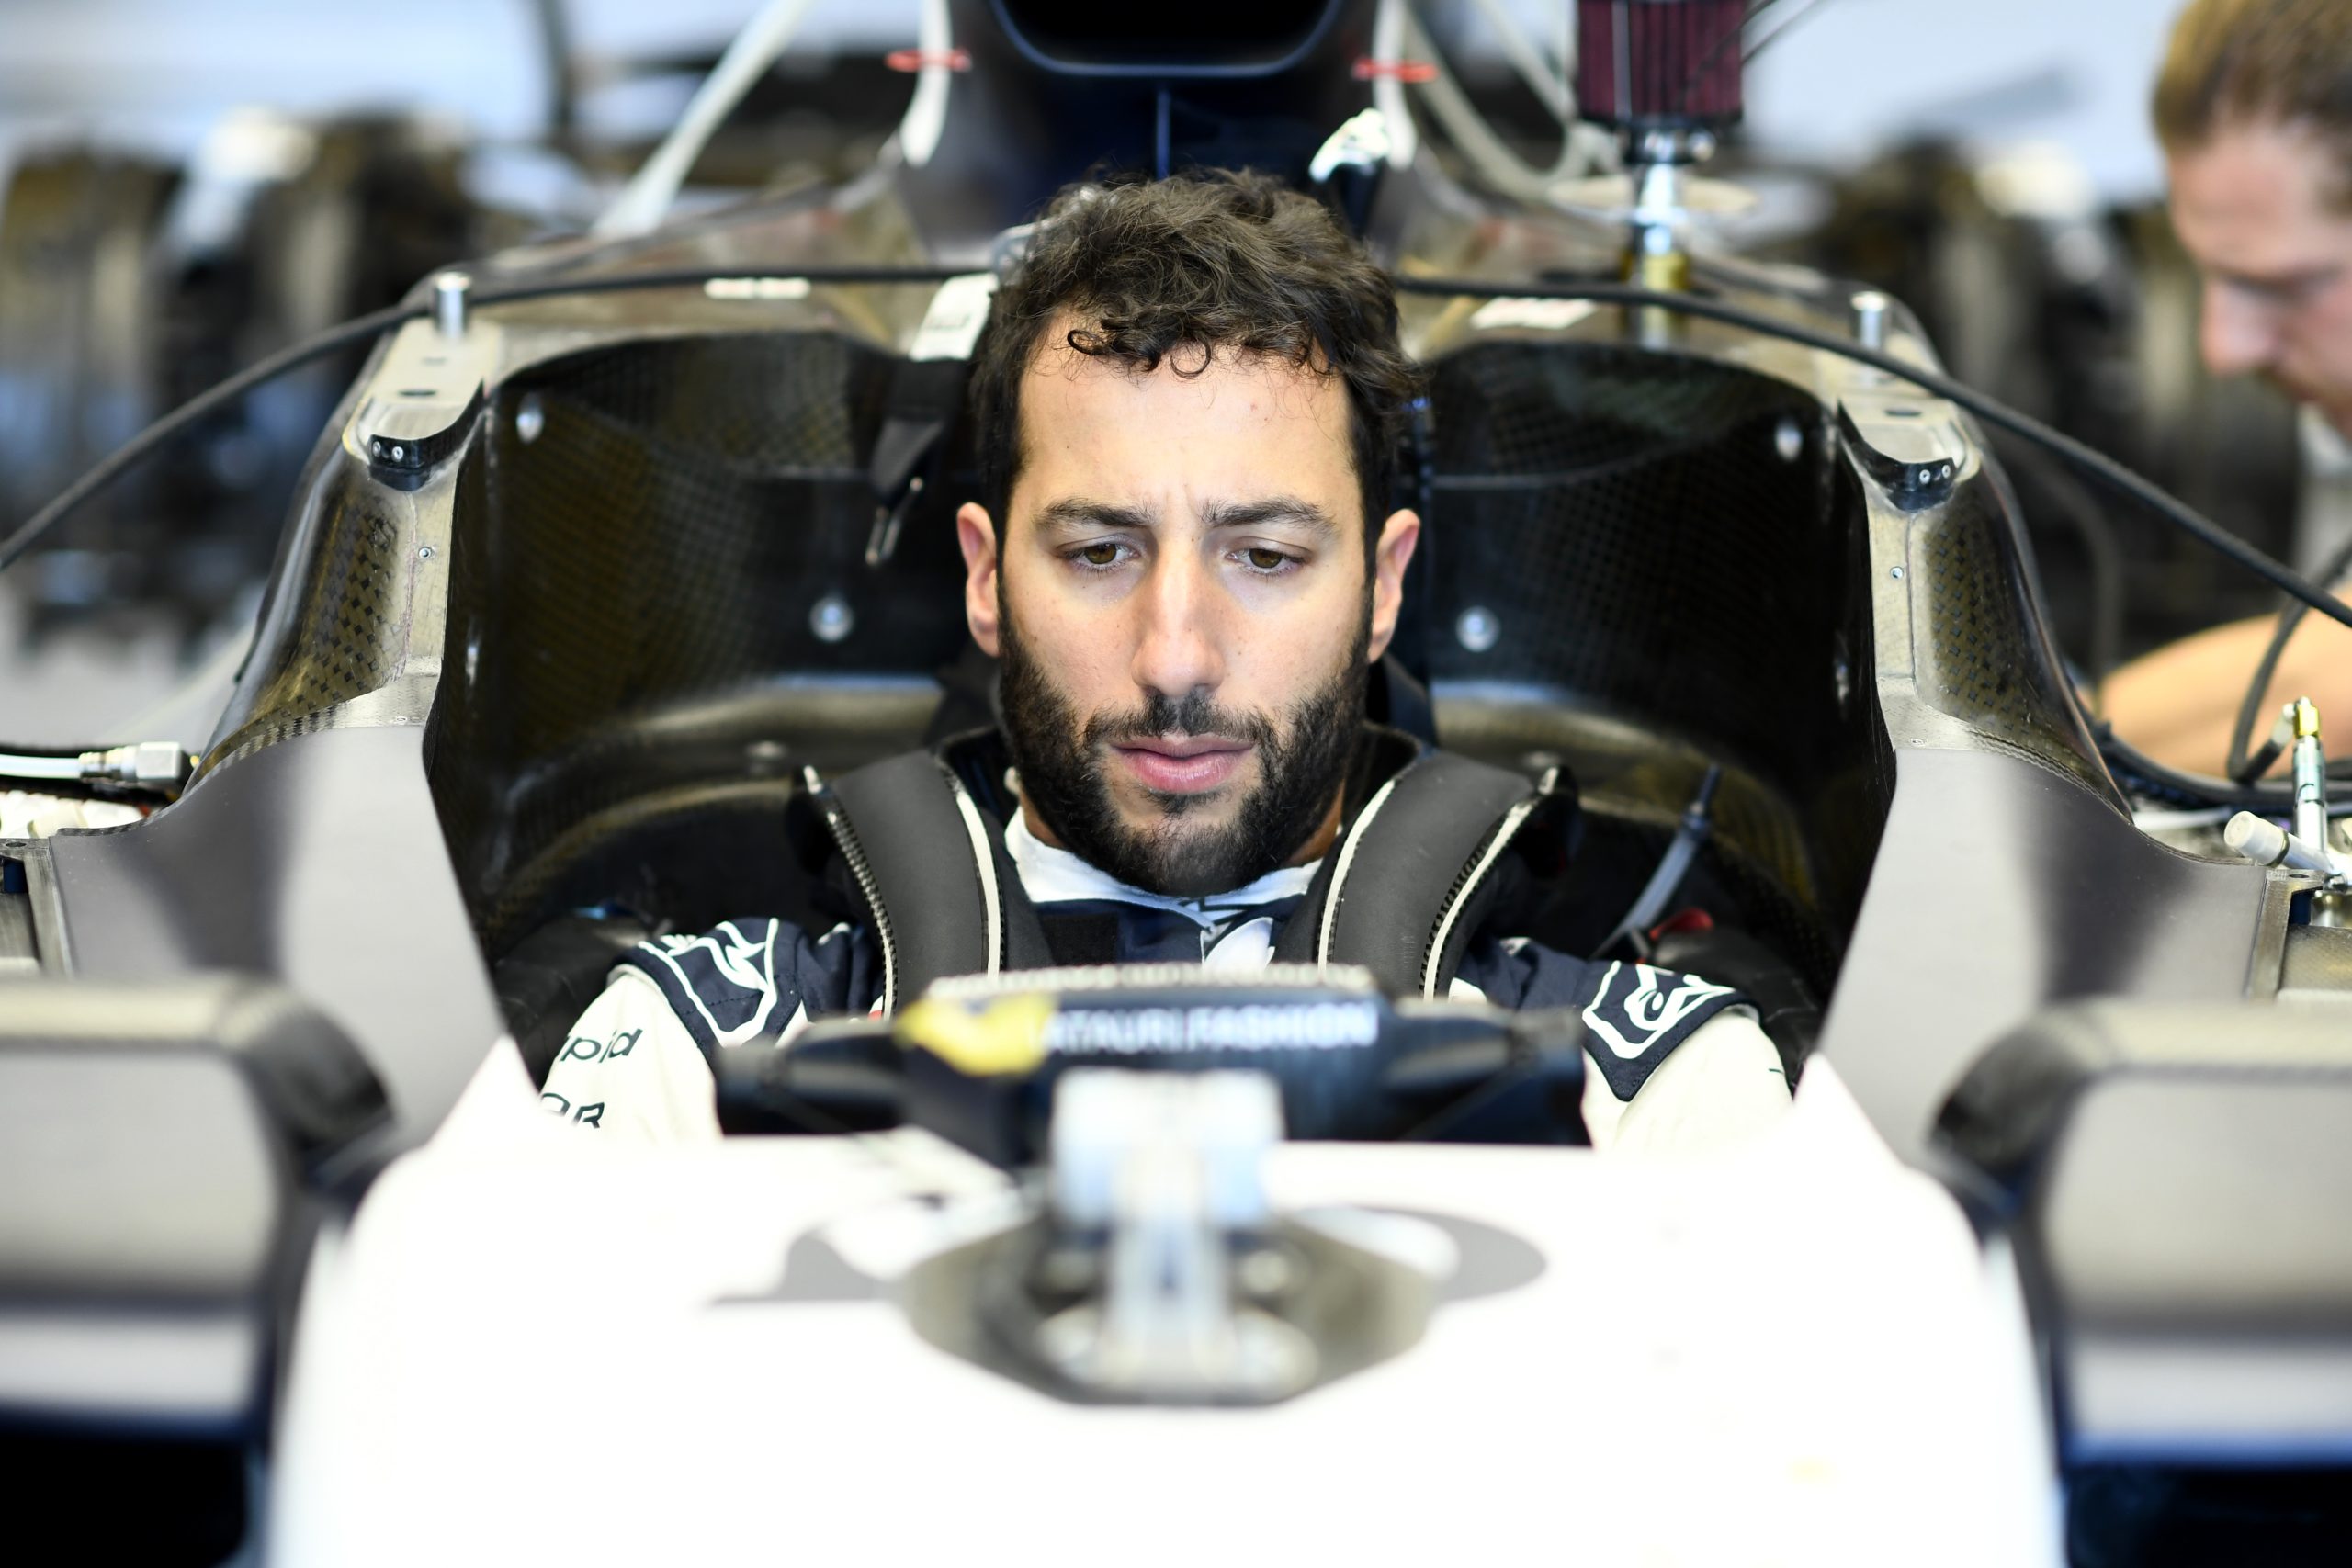 Daniel Ricciardo of Australia and Scuderia AlphaTauri has a seat fitting as he returns to racing